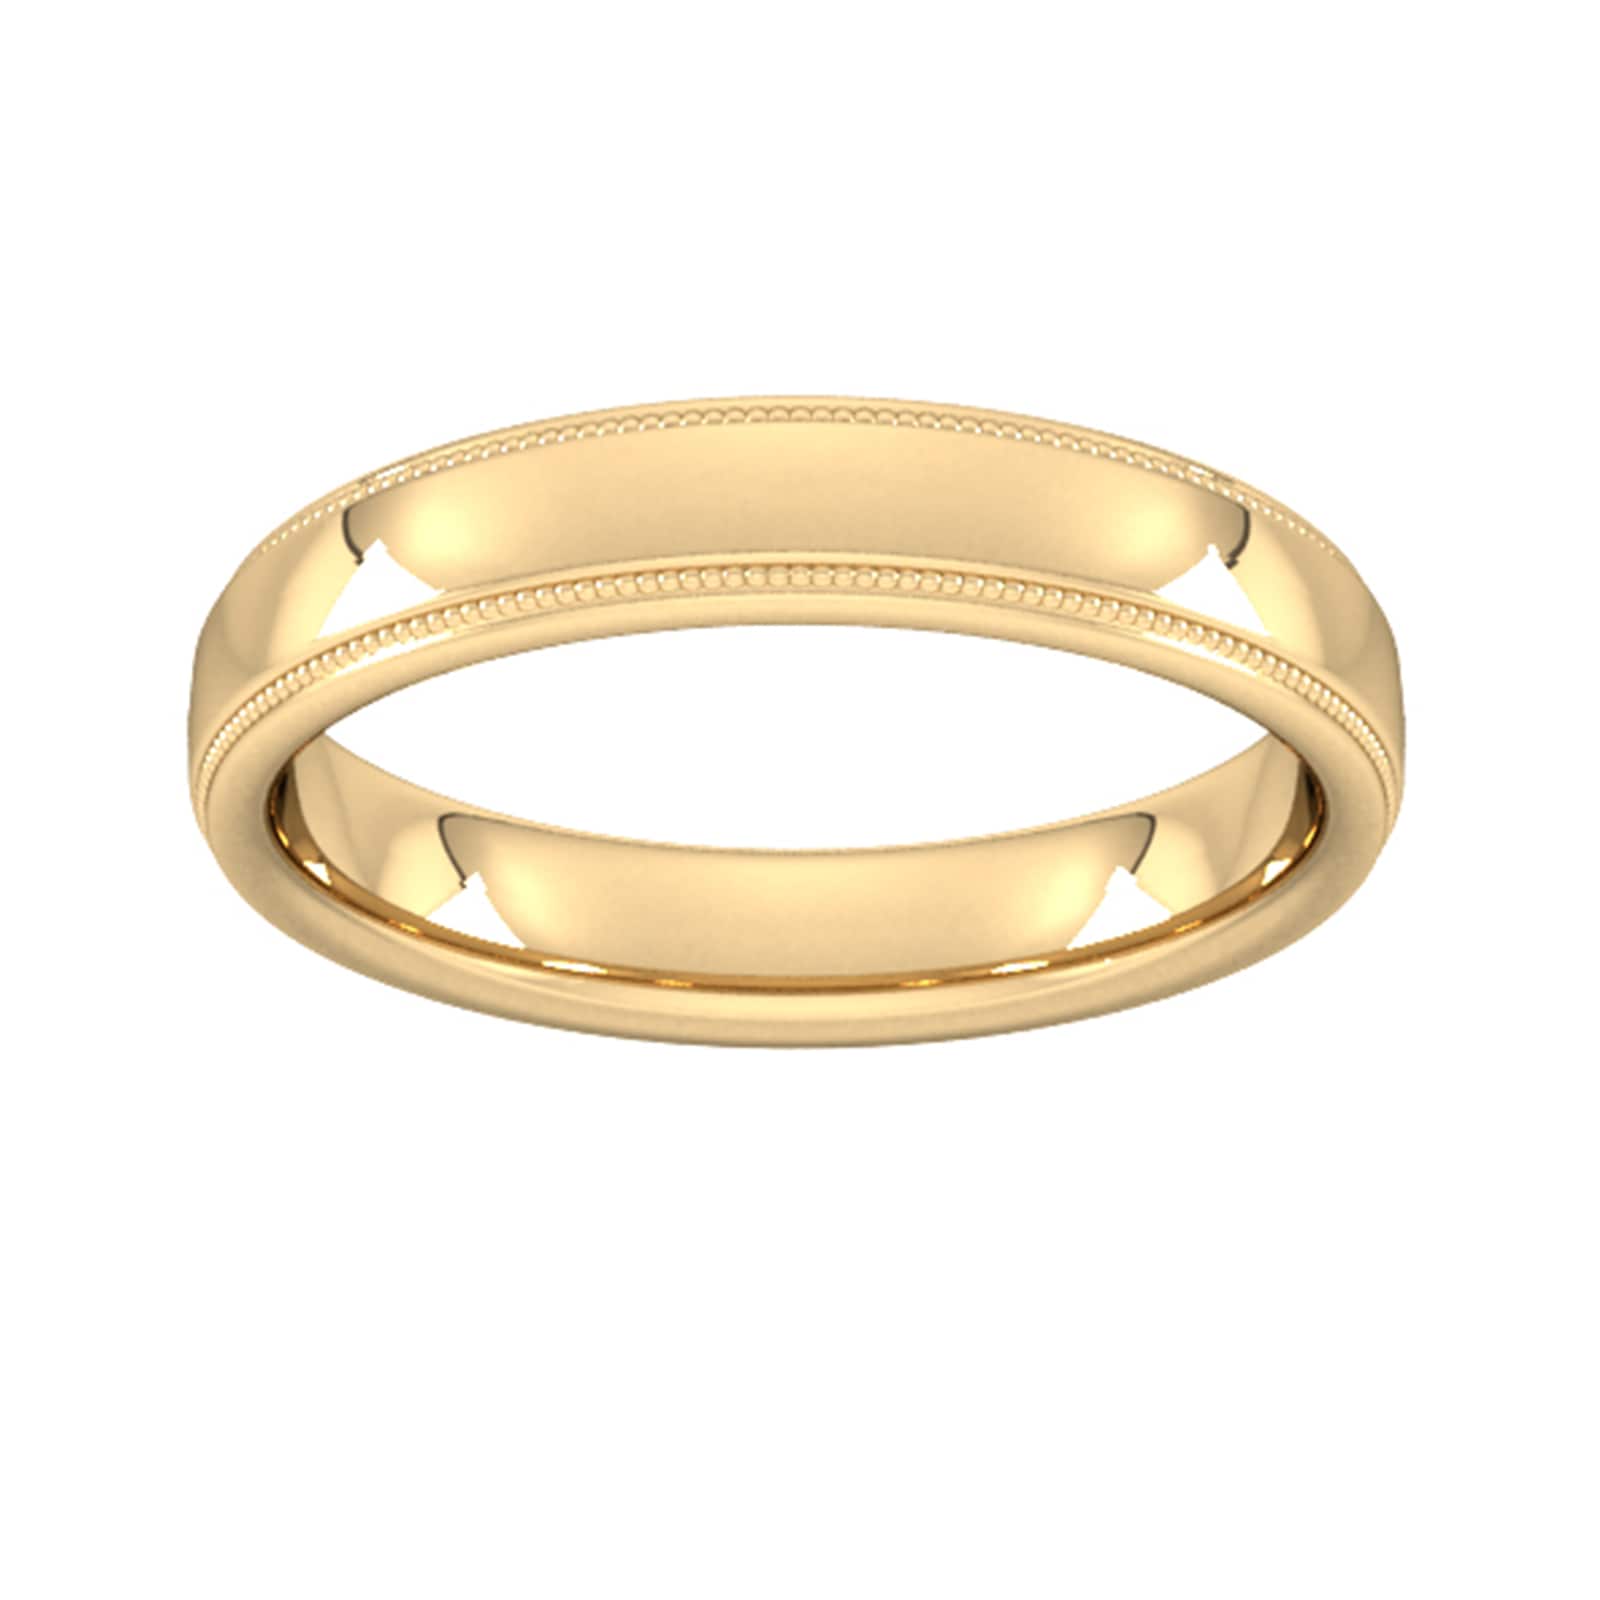 4mm Flat Court Heavy Milgrain Edge Wedding Ring In 18 Carat Yellow Gold - Ring Size O